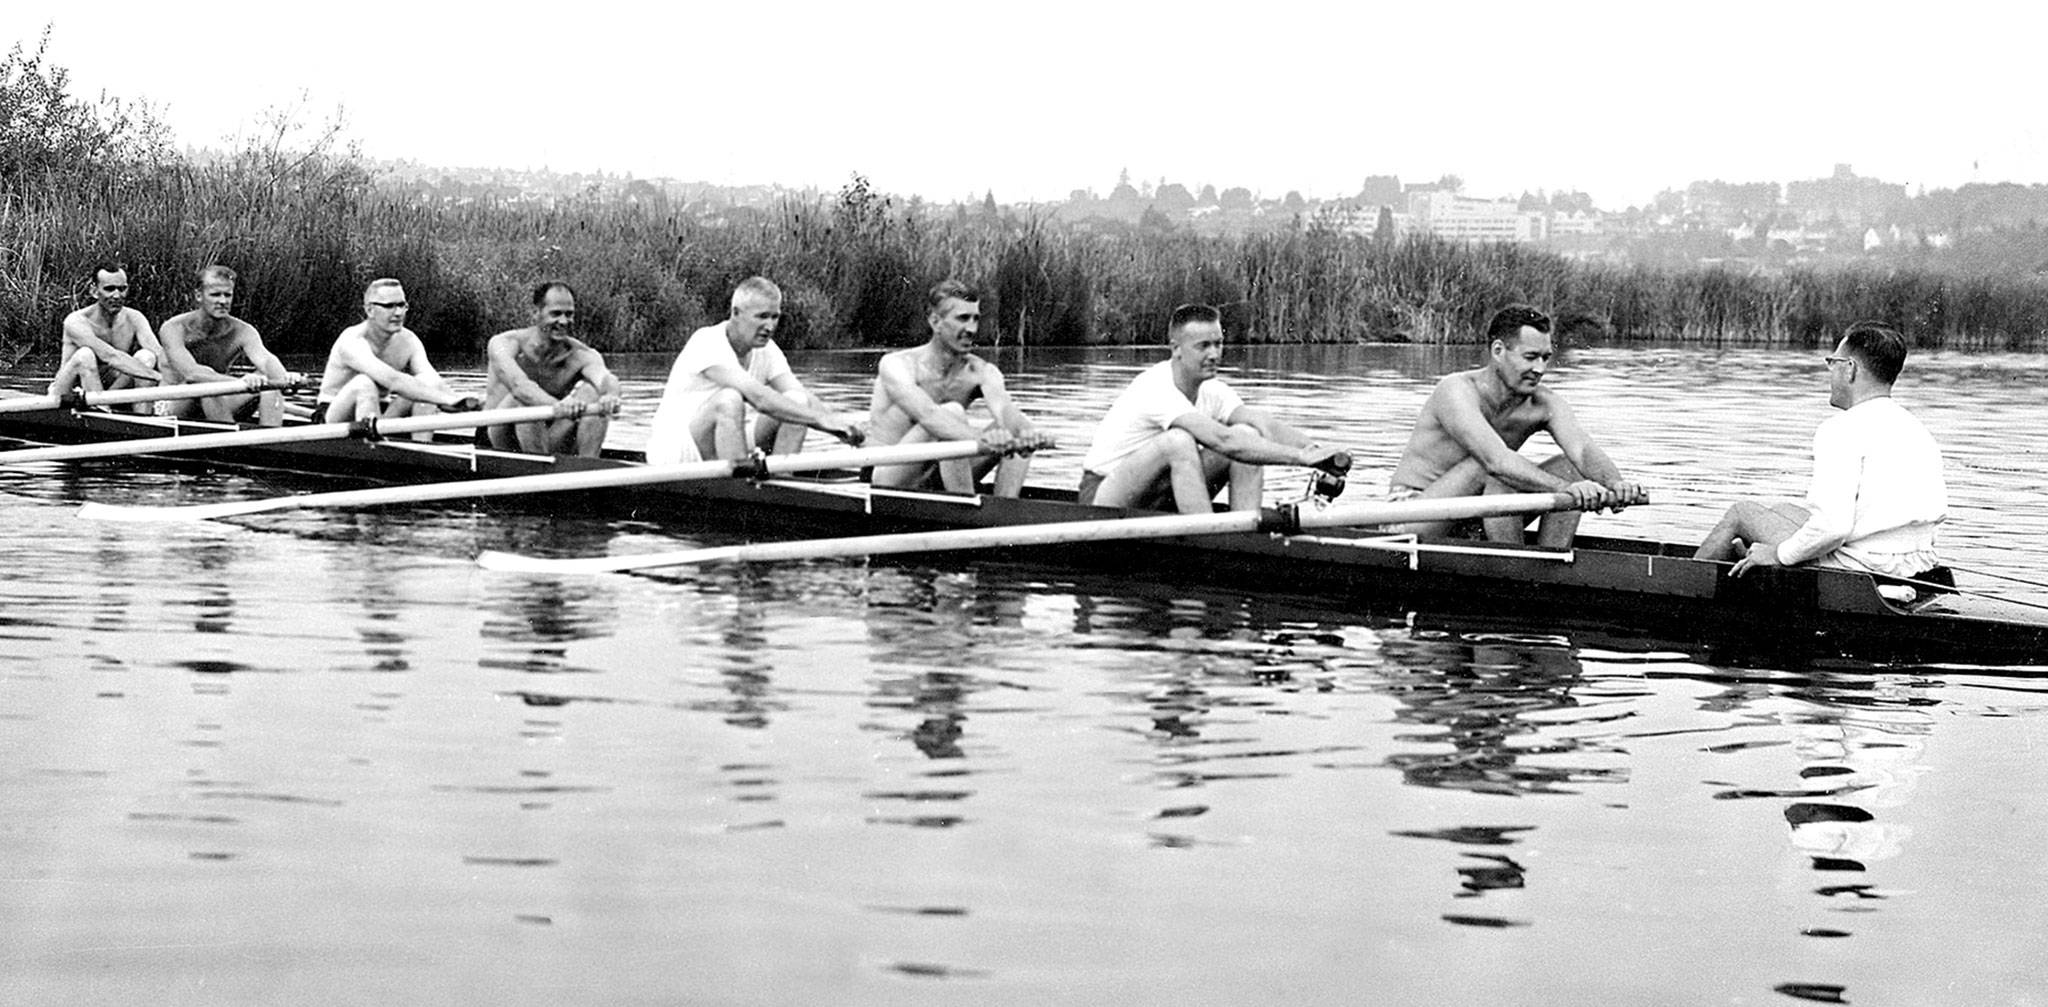 During a reunion of the 1936 Olympics crew, Joe Rantz (third from right) rows on Lake Washington with his teammates. (University of Washington Archive)